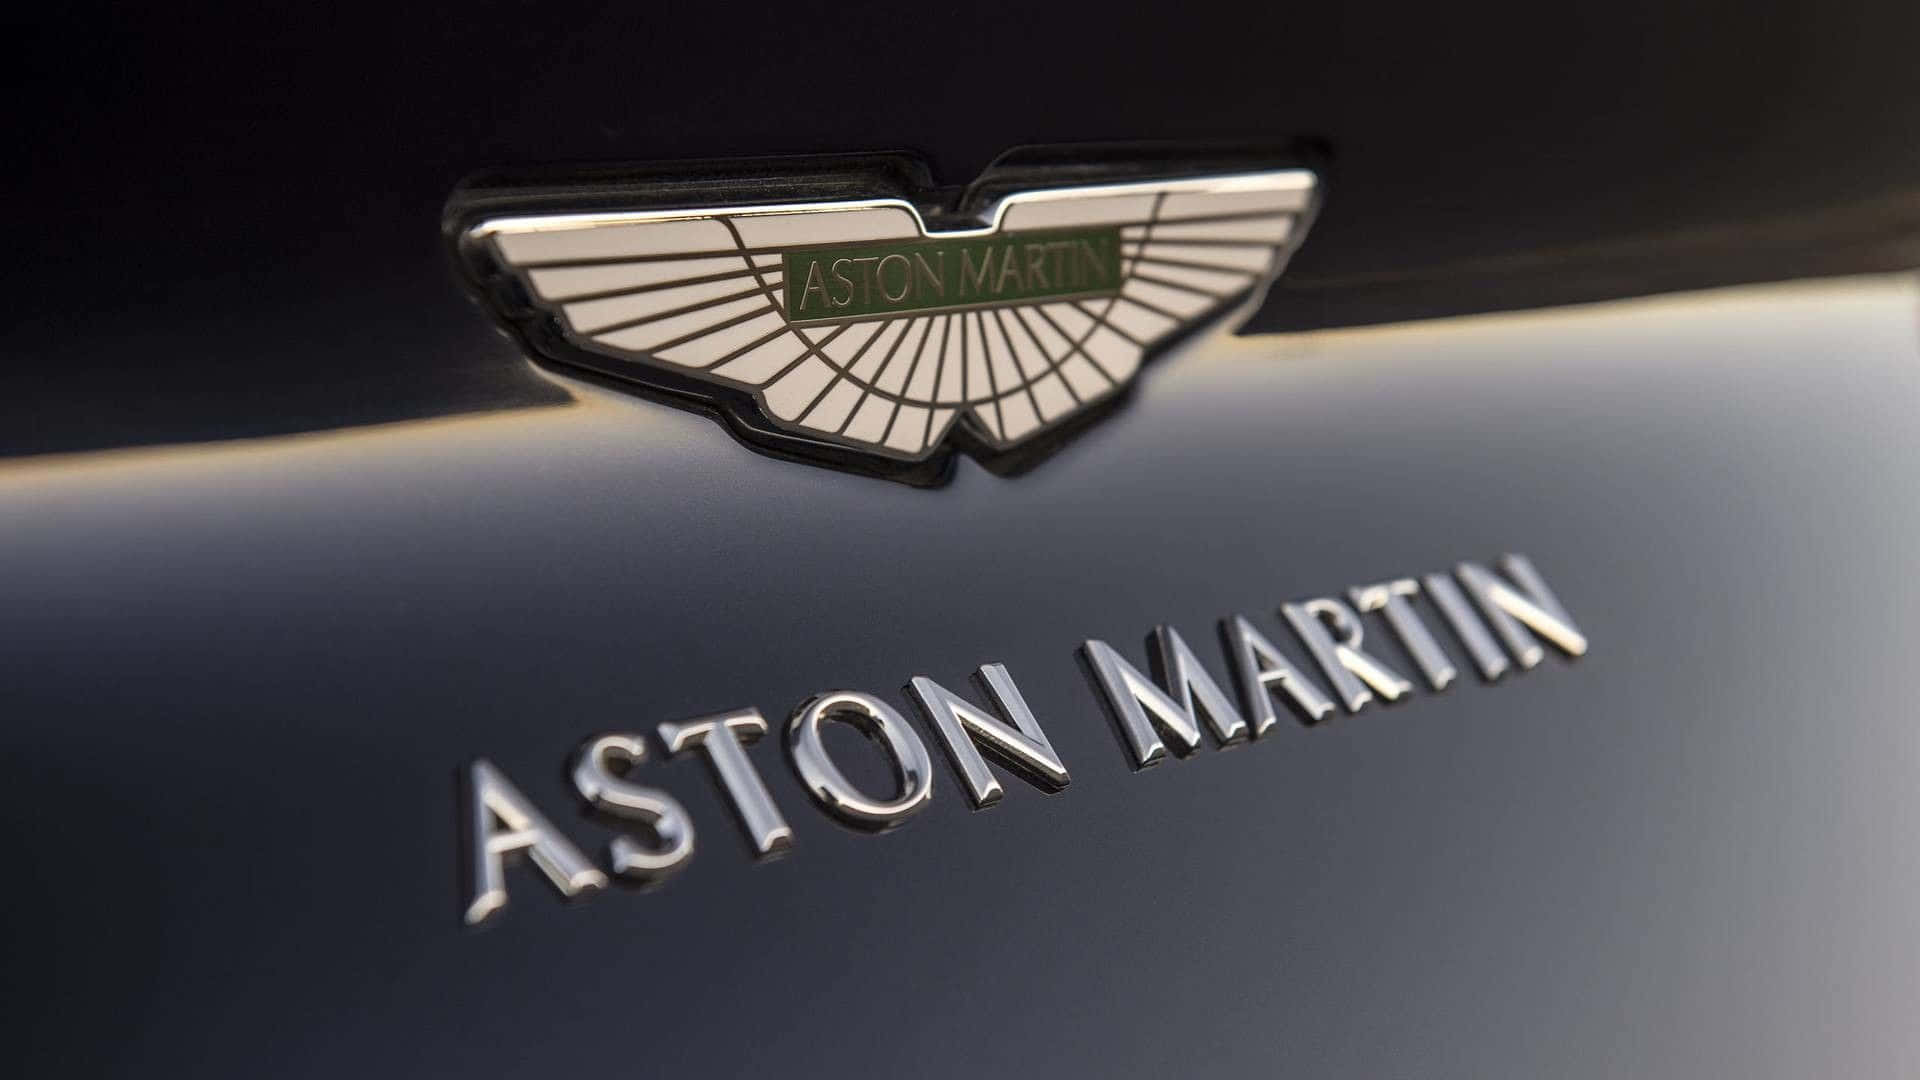 Feel the Power of Aston Martin